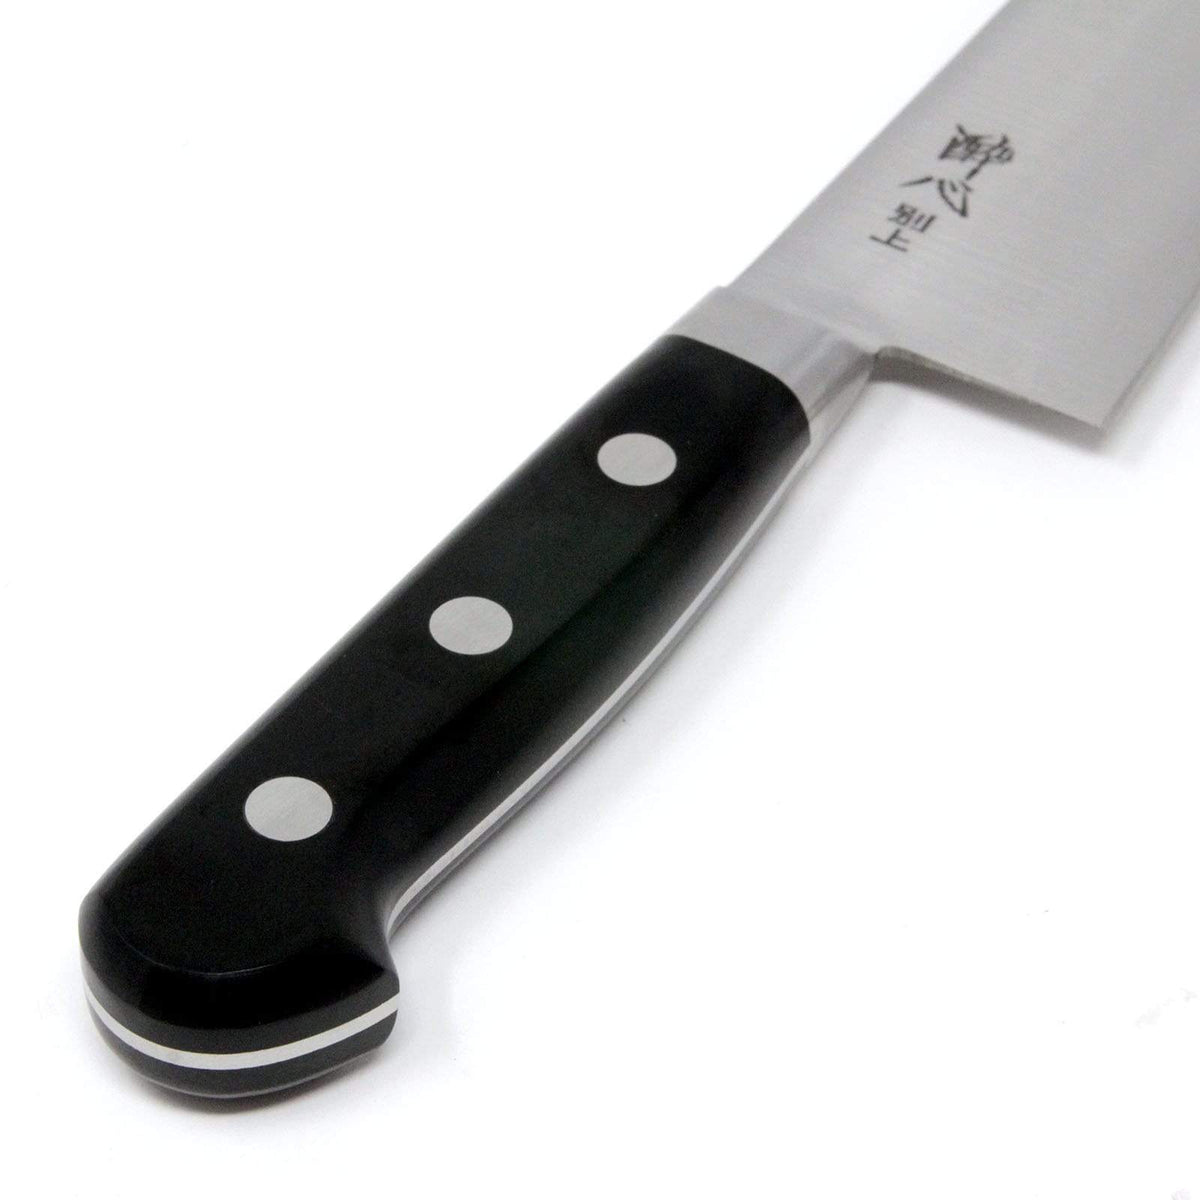 Suisin Nihonko Japanese Carbon Steel Gyuto Knife Gyuto Knives